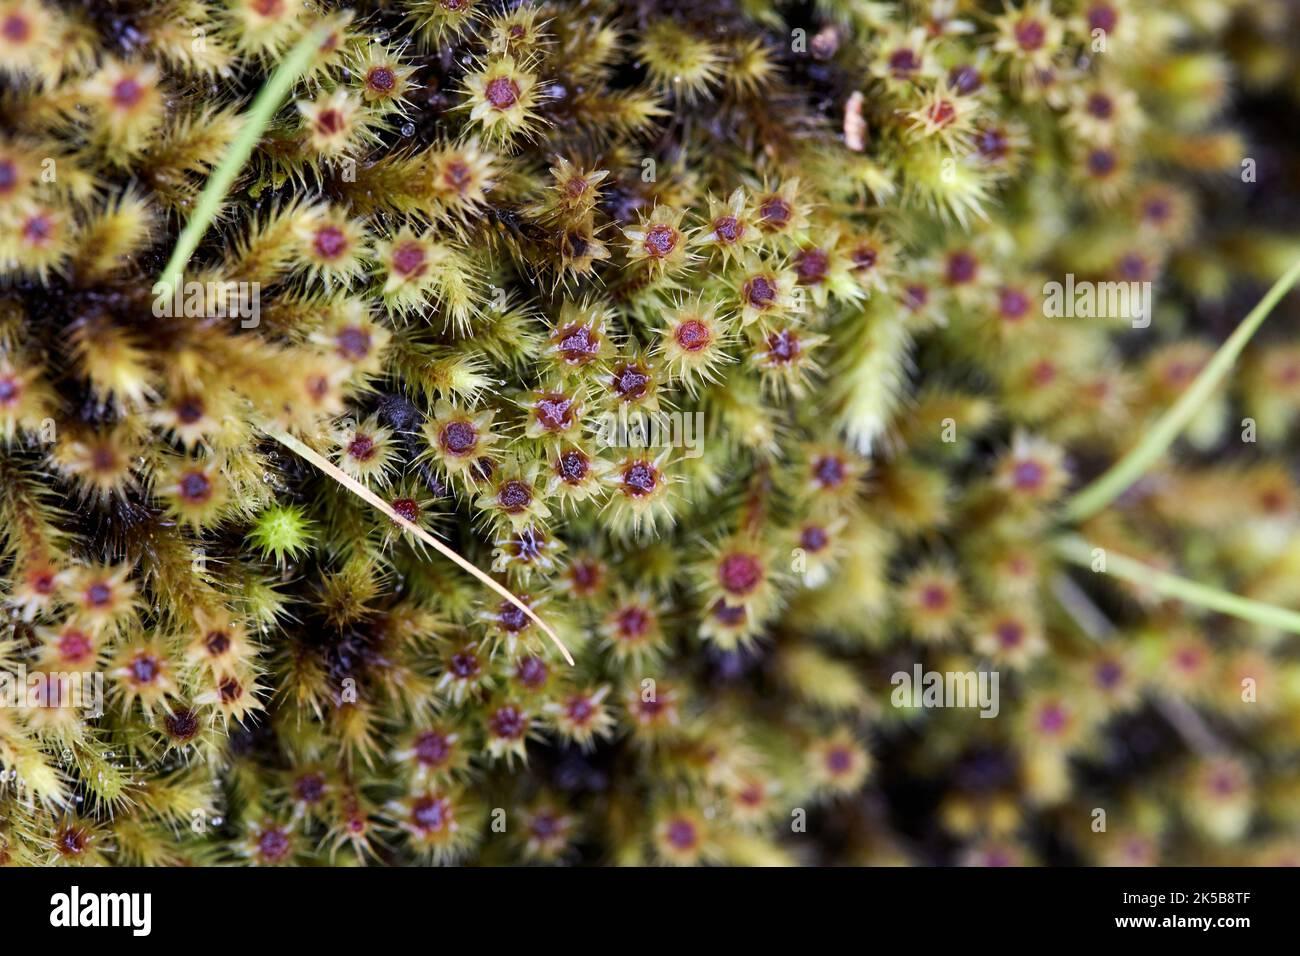 a-close-up-shot-of-breutelia-affinis-moss-texture-2K5B8TF.jpg